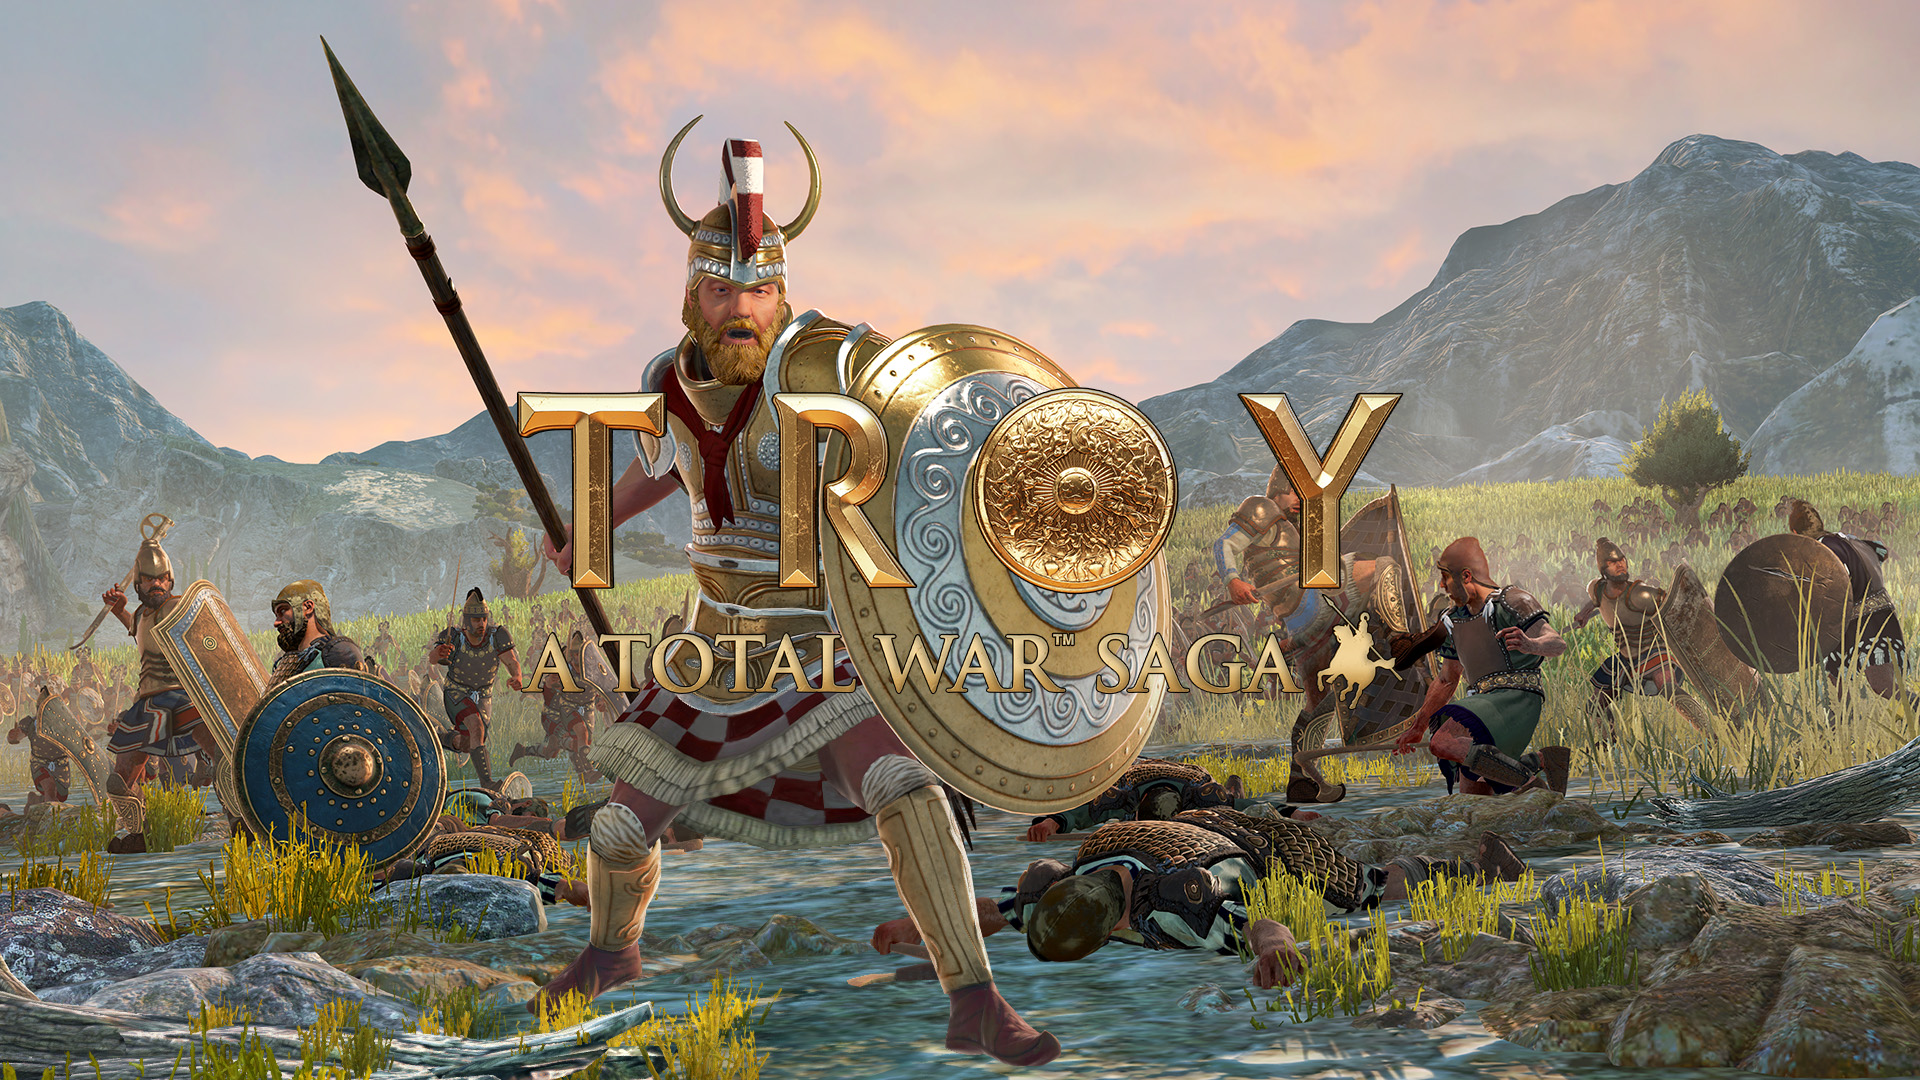 the troy saga download